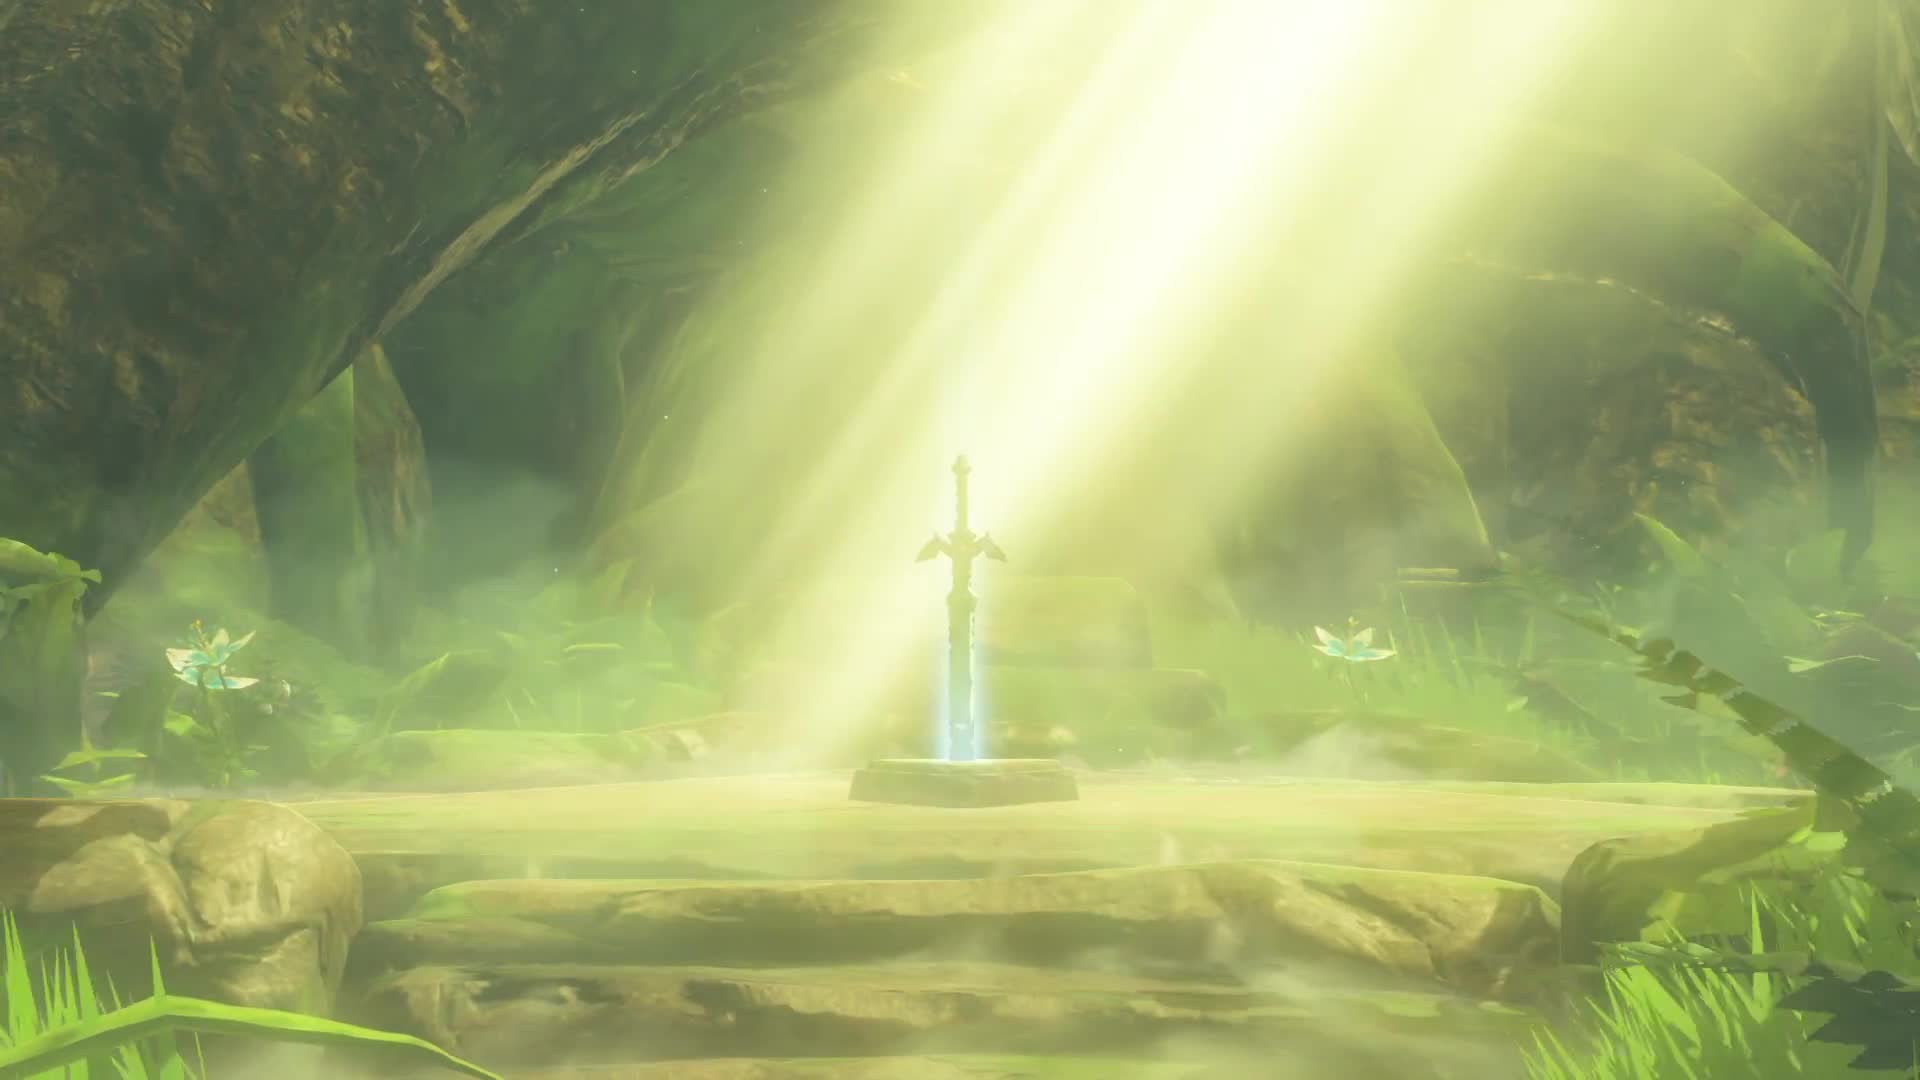 Legend of Zelda: Breath of Wild - Switch trailer